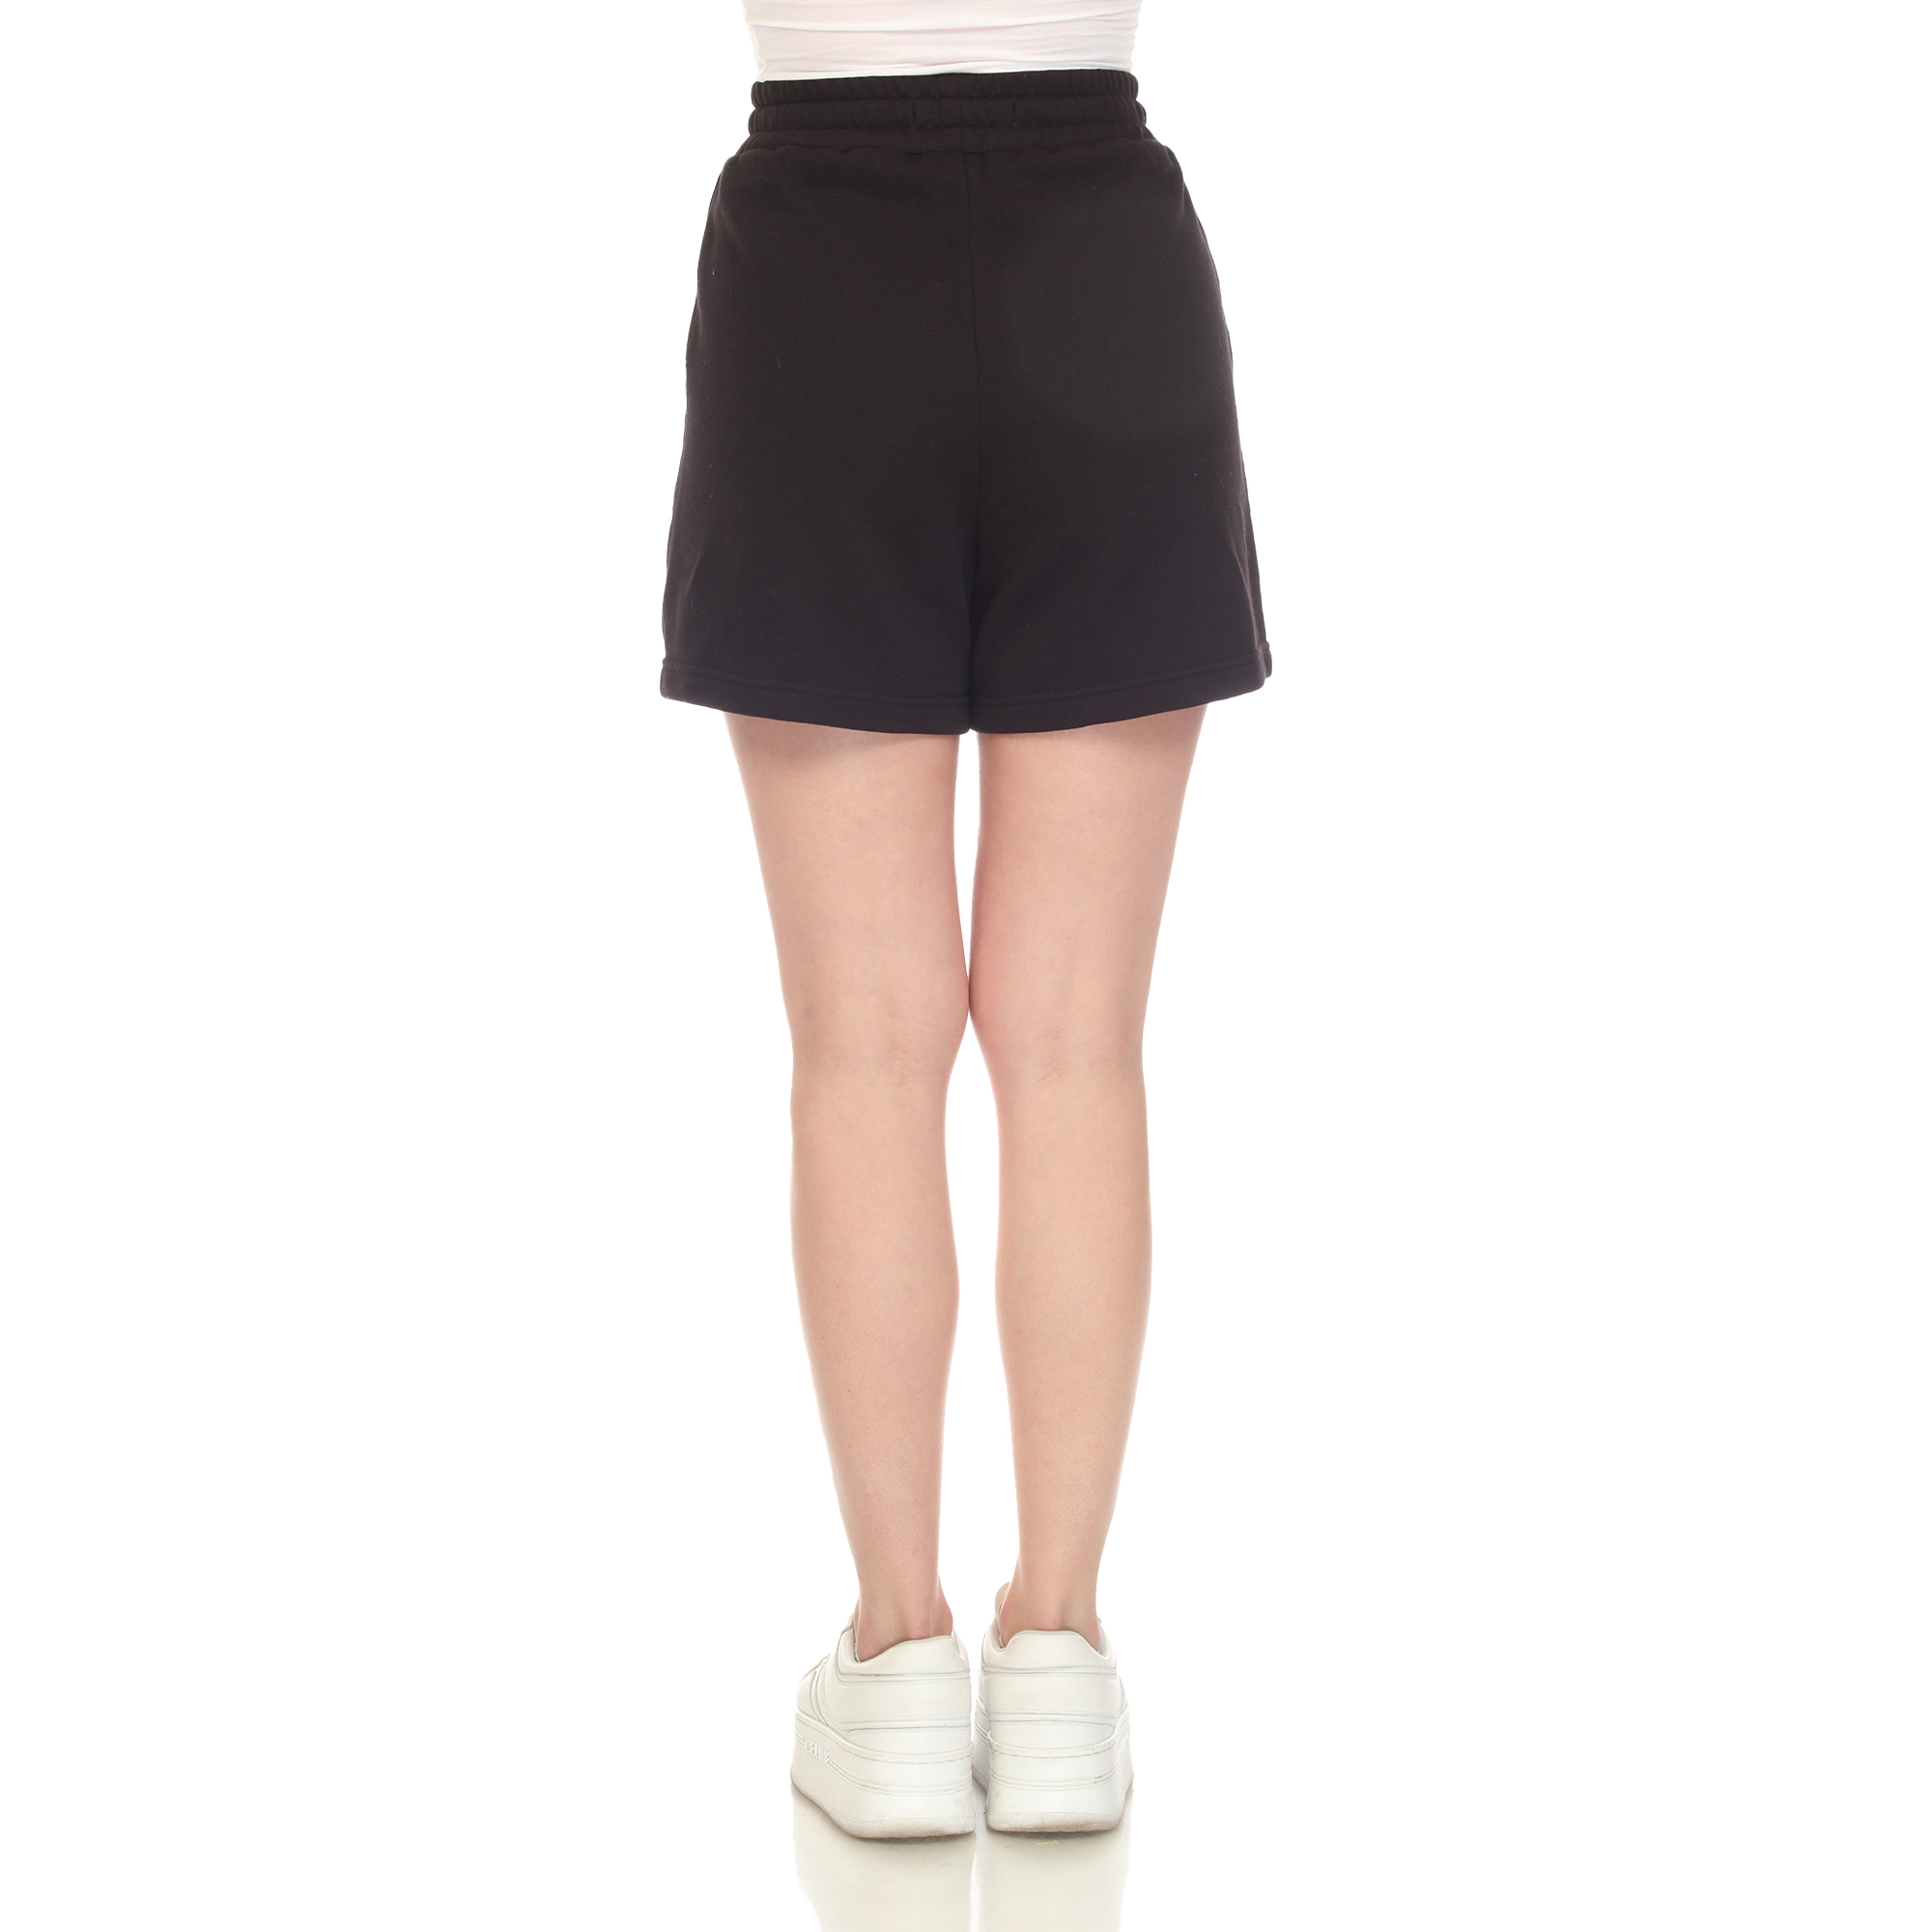 White Mark Women's Super Soft Drawstring Waistband Sweat Shorts - Navy, Medium